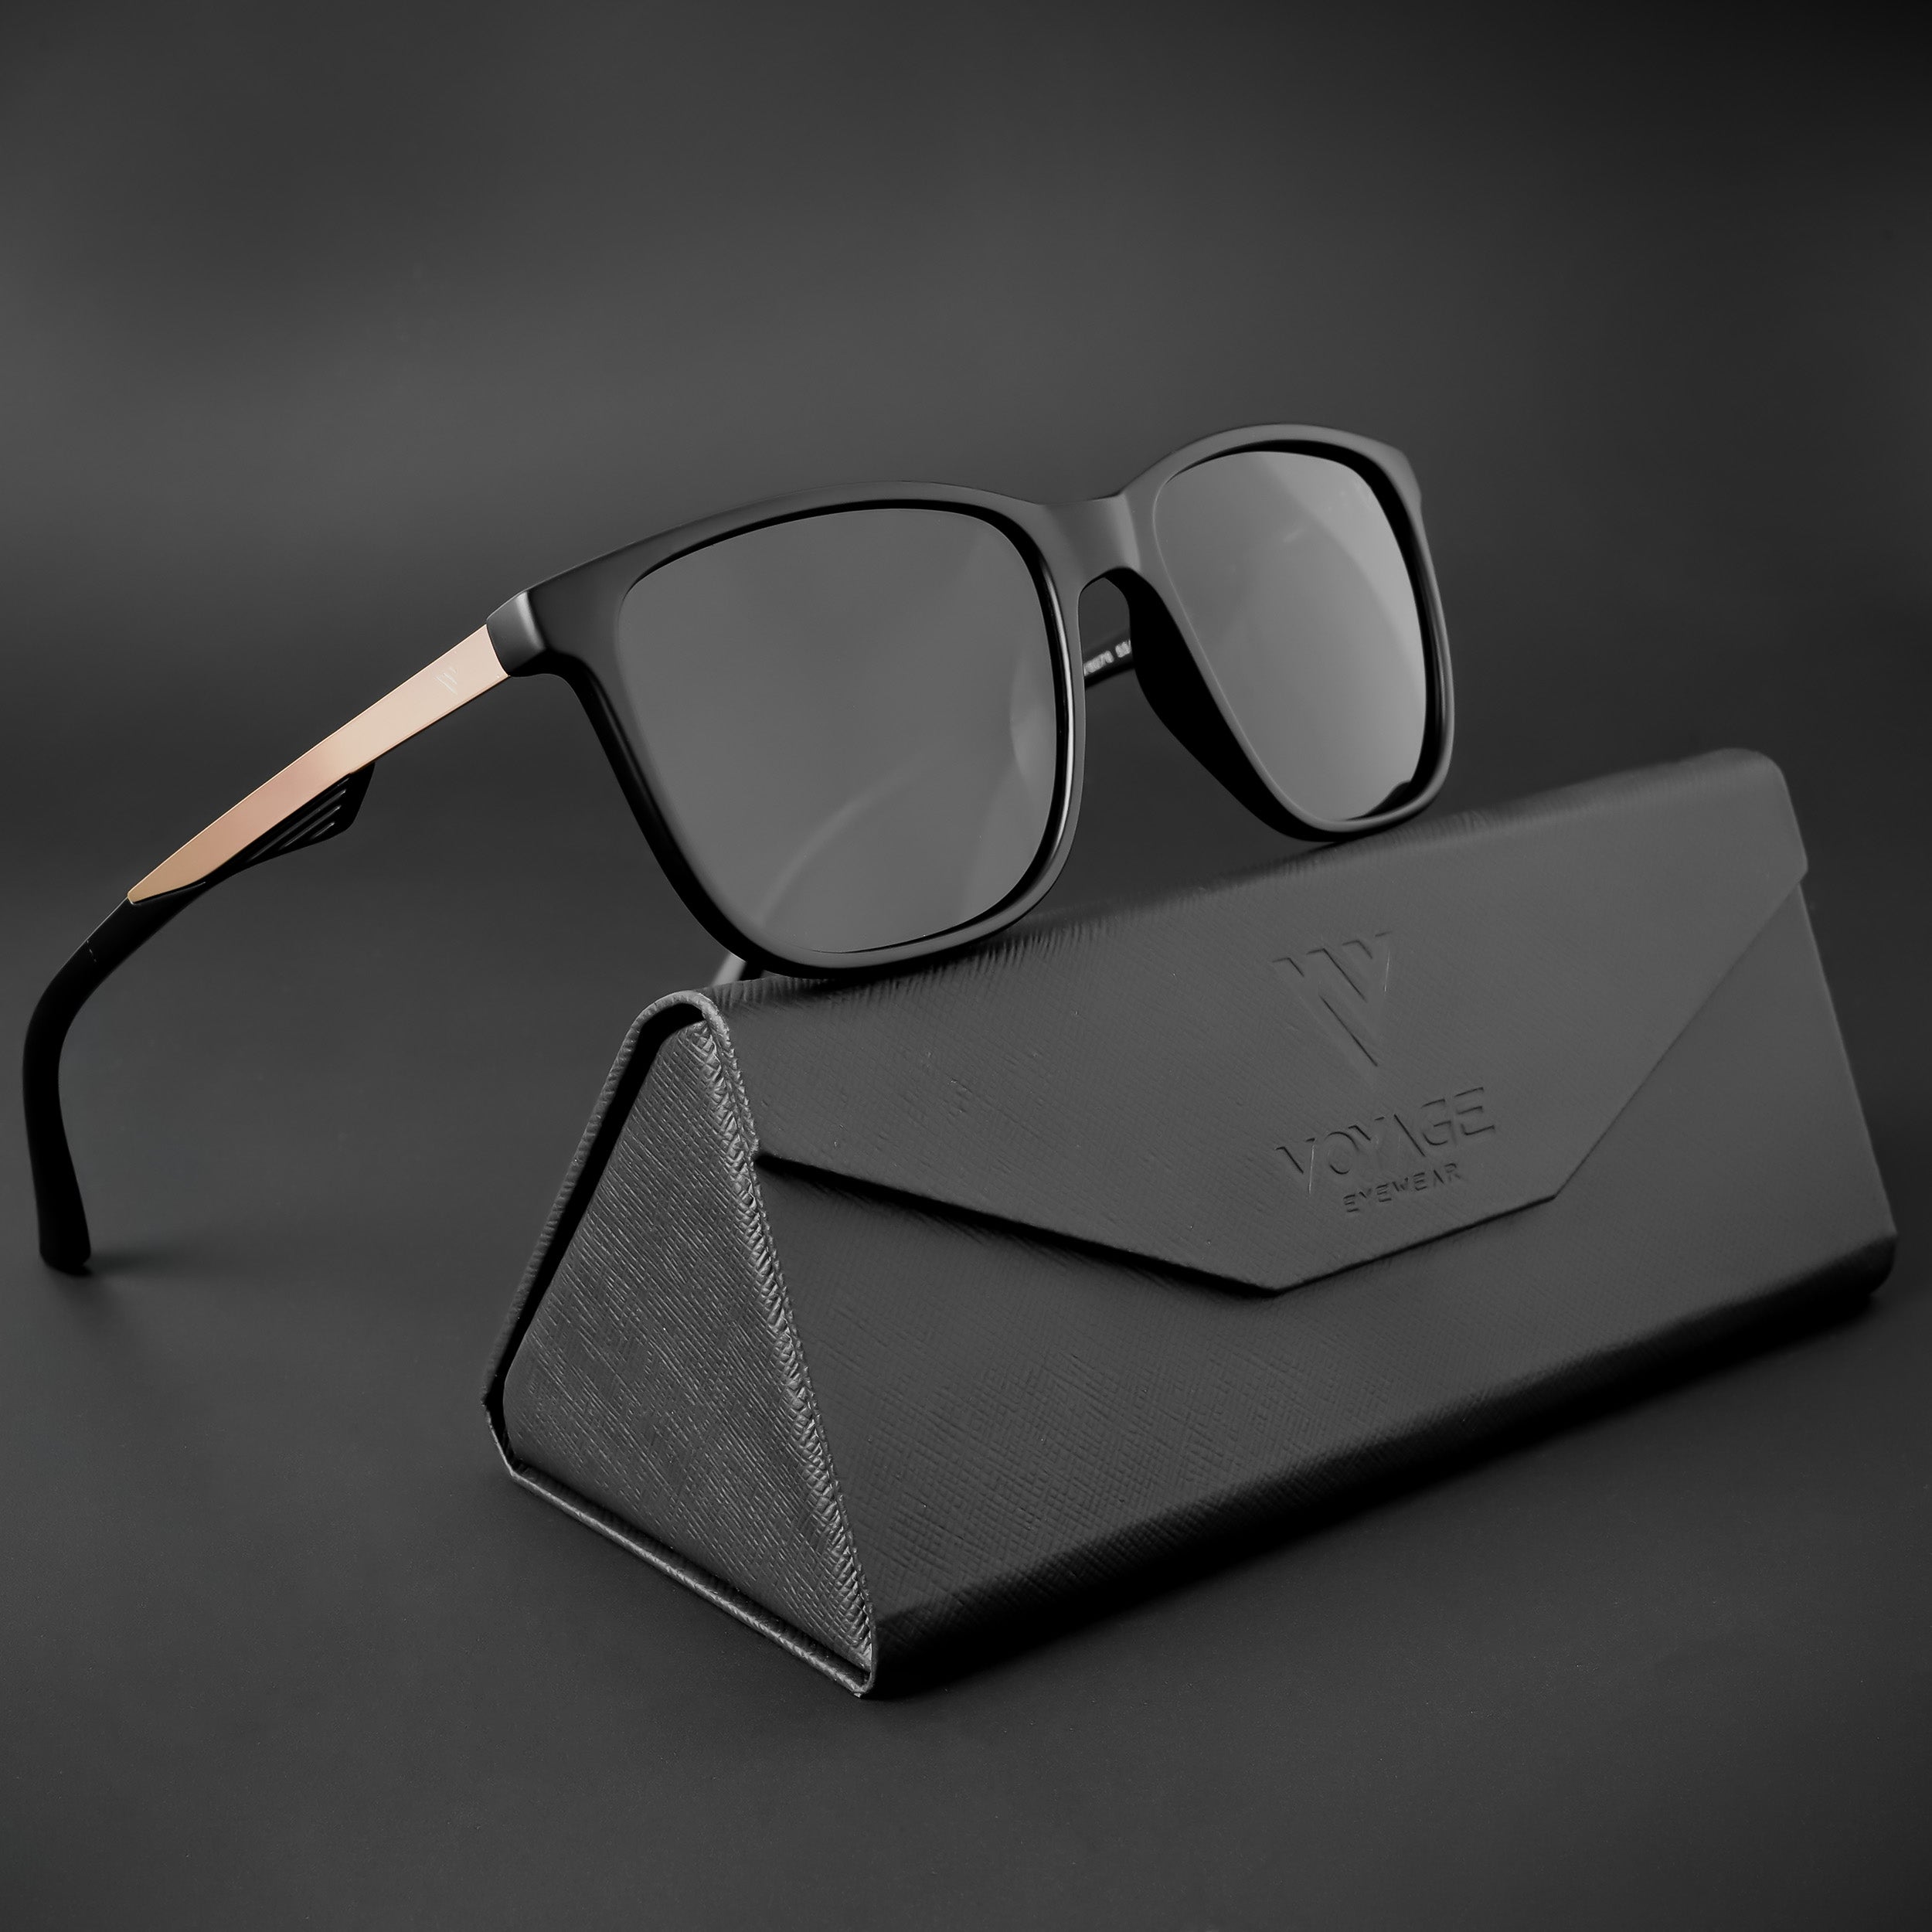 Mirrored Lens Sunglasses | Shop Mirrored Sunglasses Online